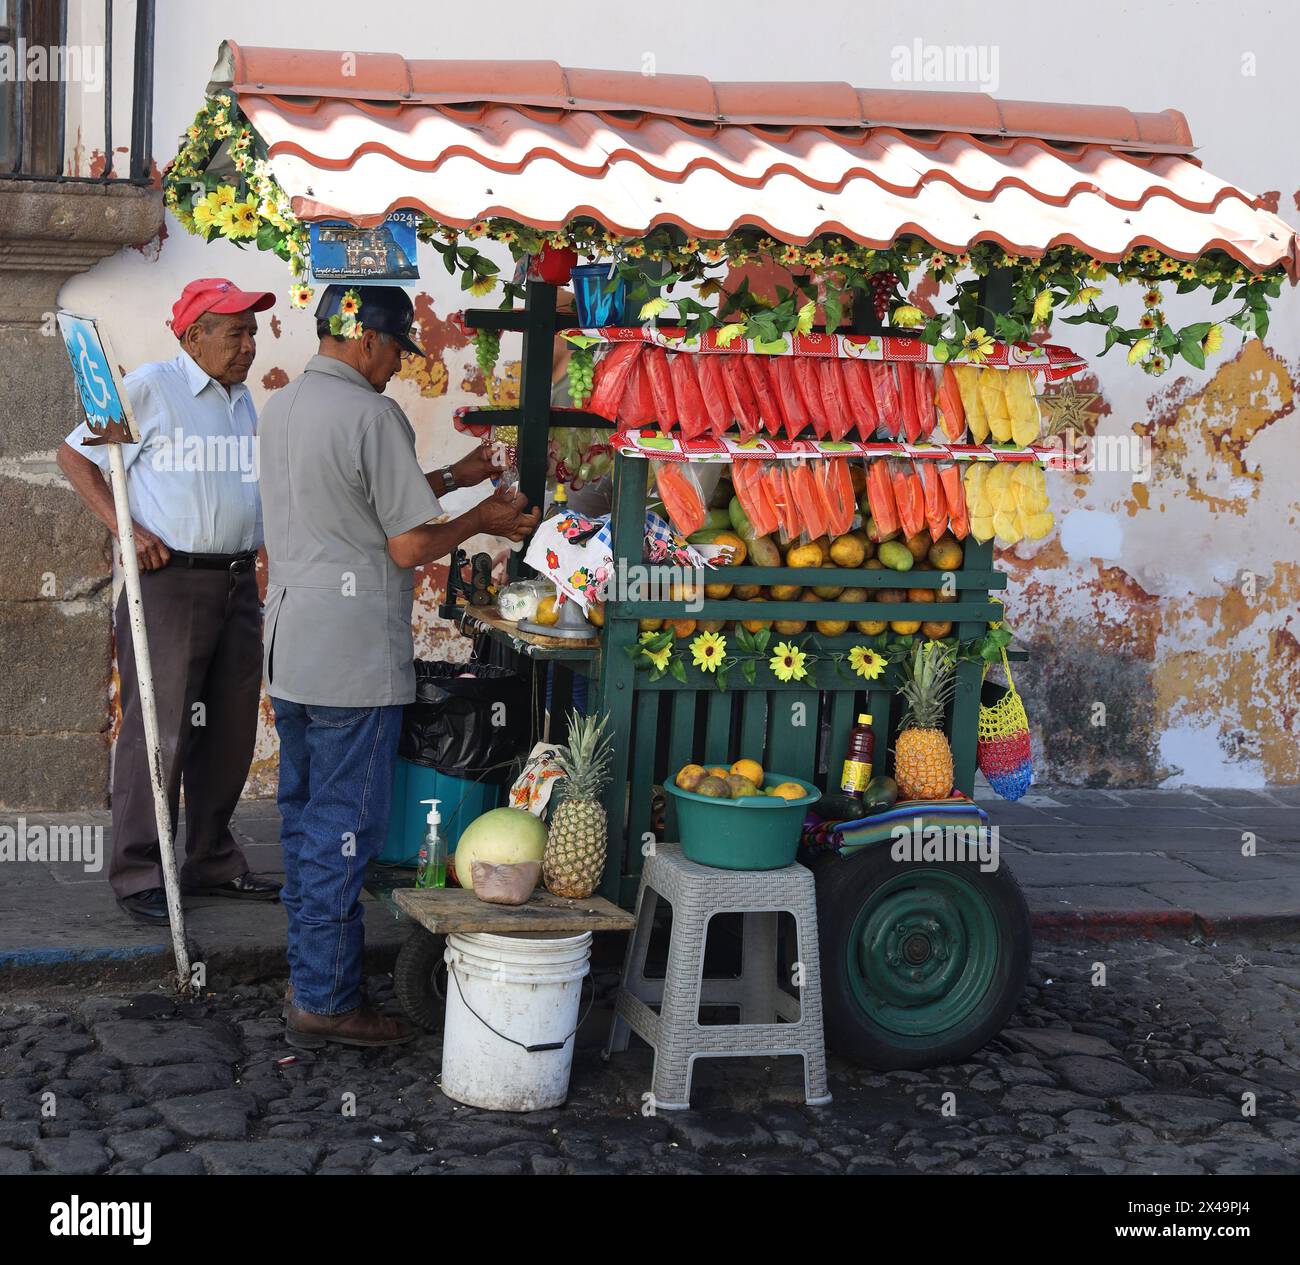 Fruit stall. Street seller, Antigua, Guatemala, Central America. Colourful street vendor's cart, selling fresh pineapple, mango, papaya, grapes etc. Stock Photo